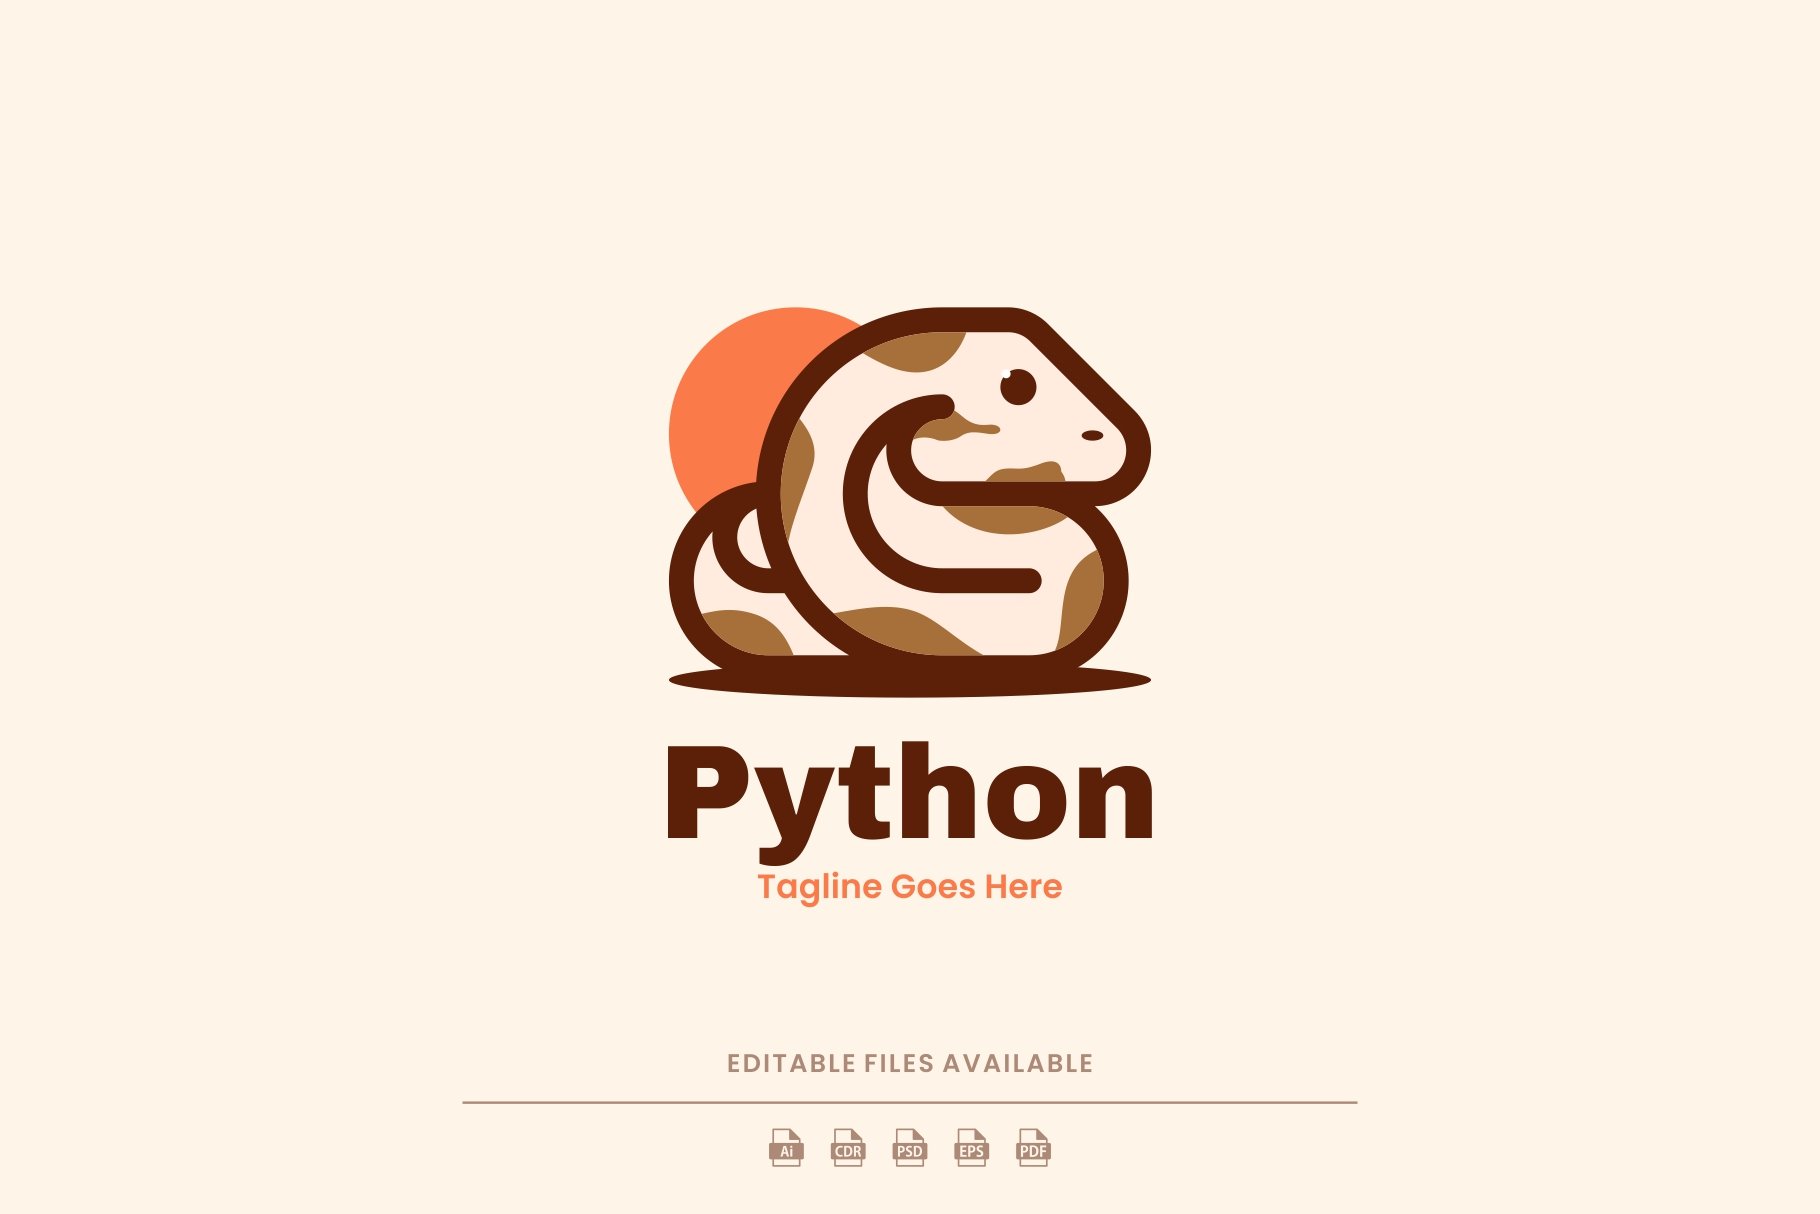 Python Simple Mascot Logo cover image.